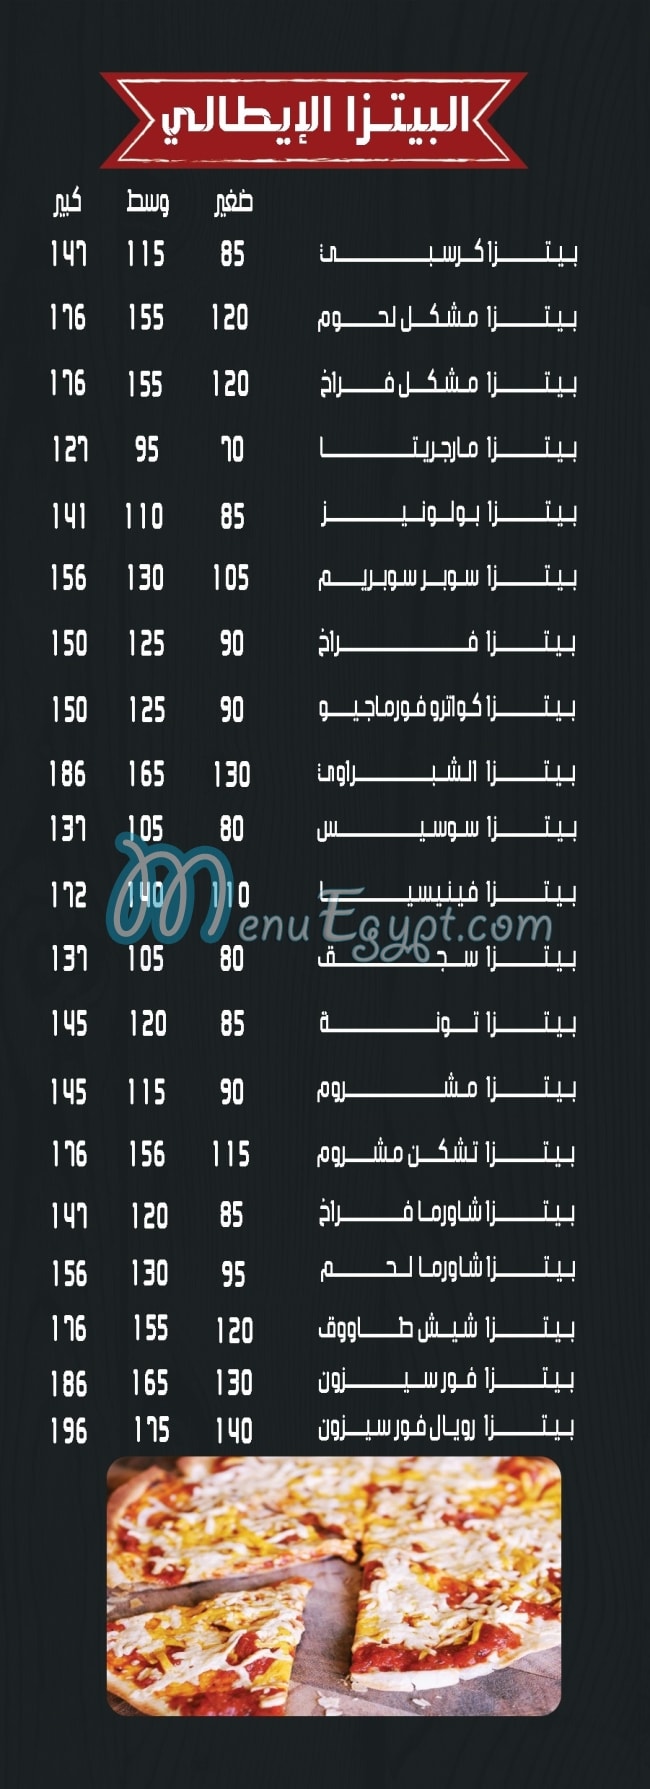 Elshabrawy Maadi menu prices